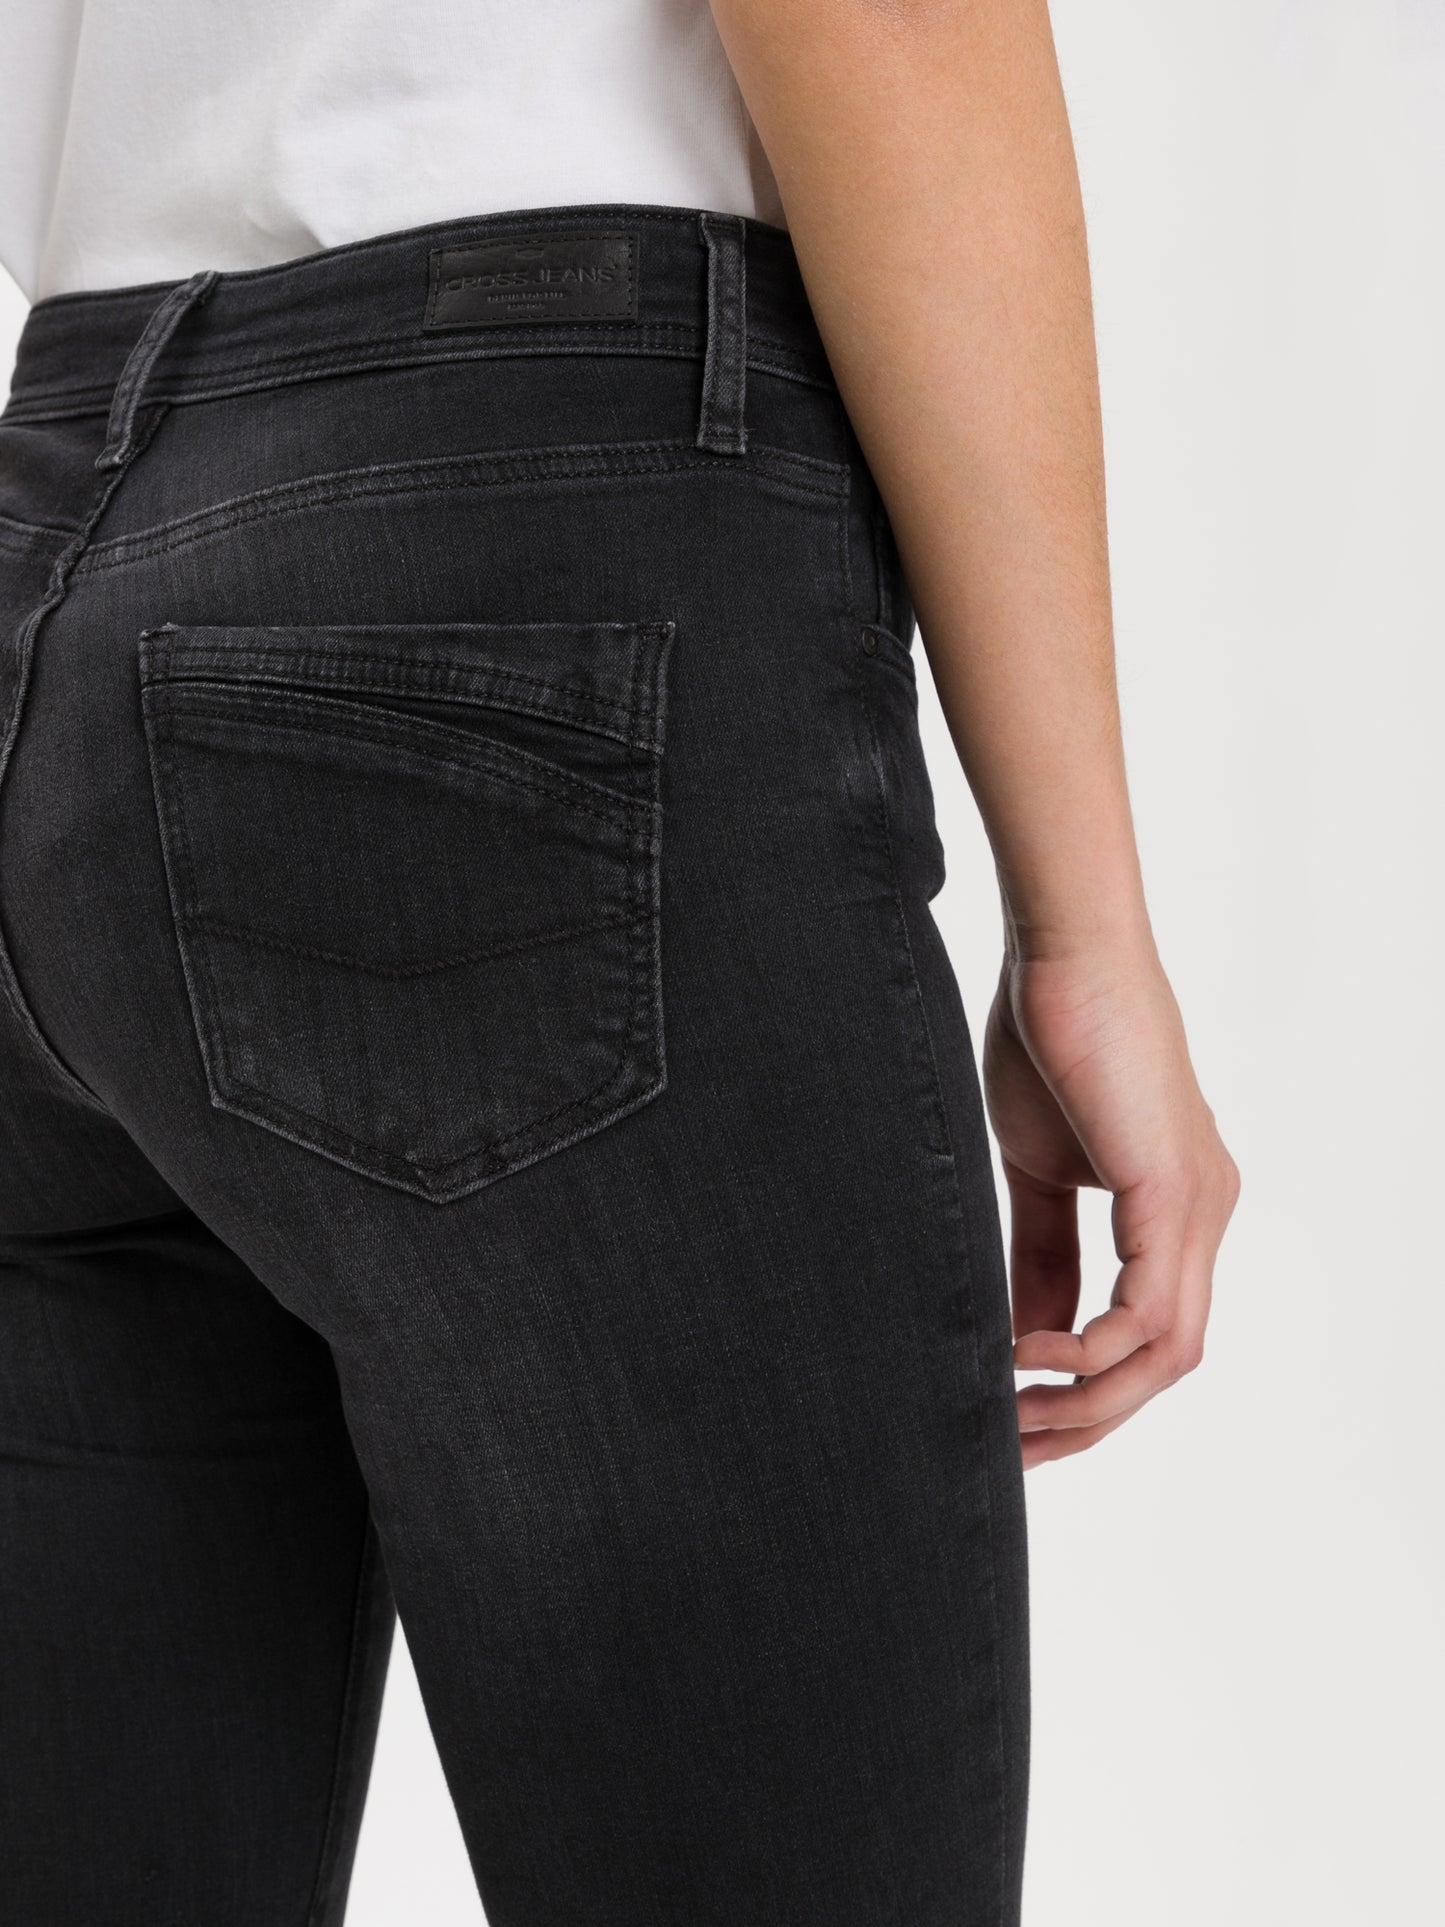 Anya women's jeans slim fit high waist black